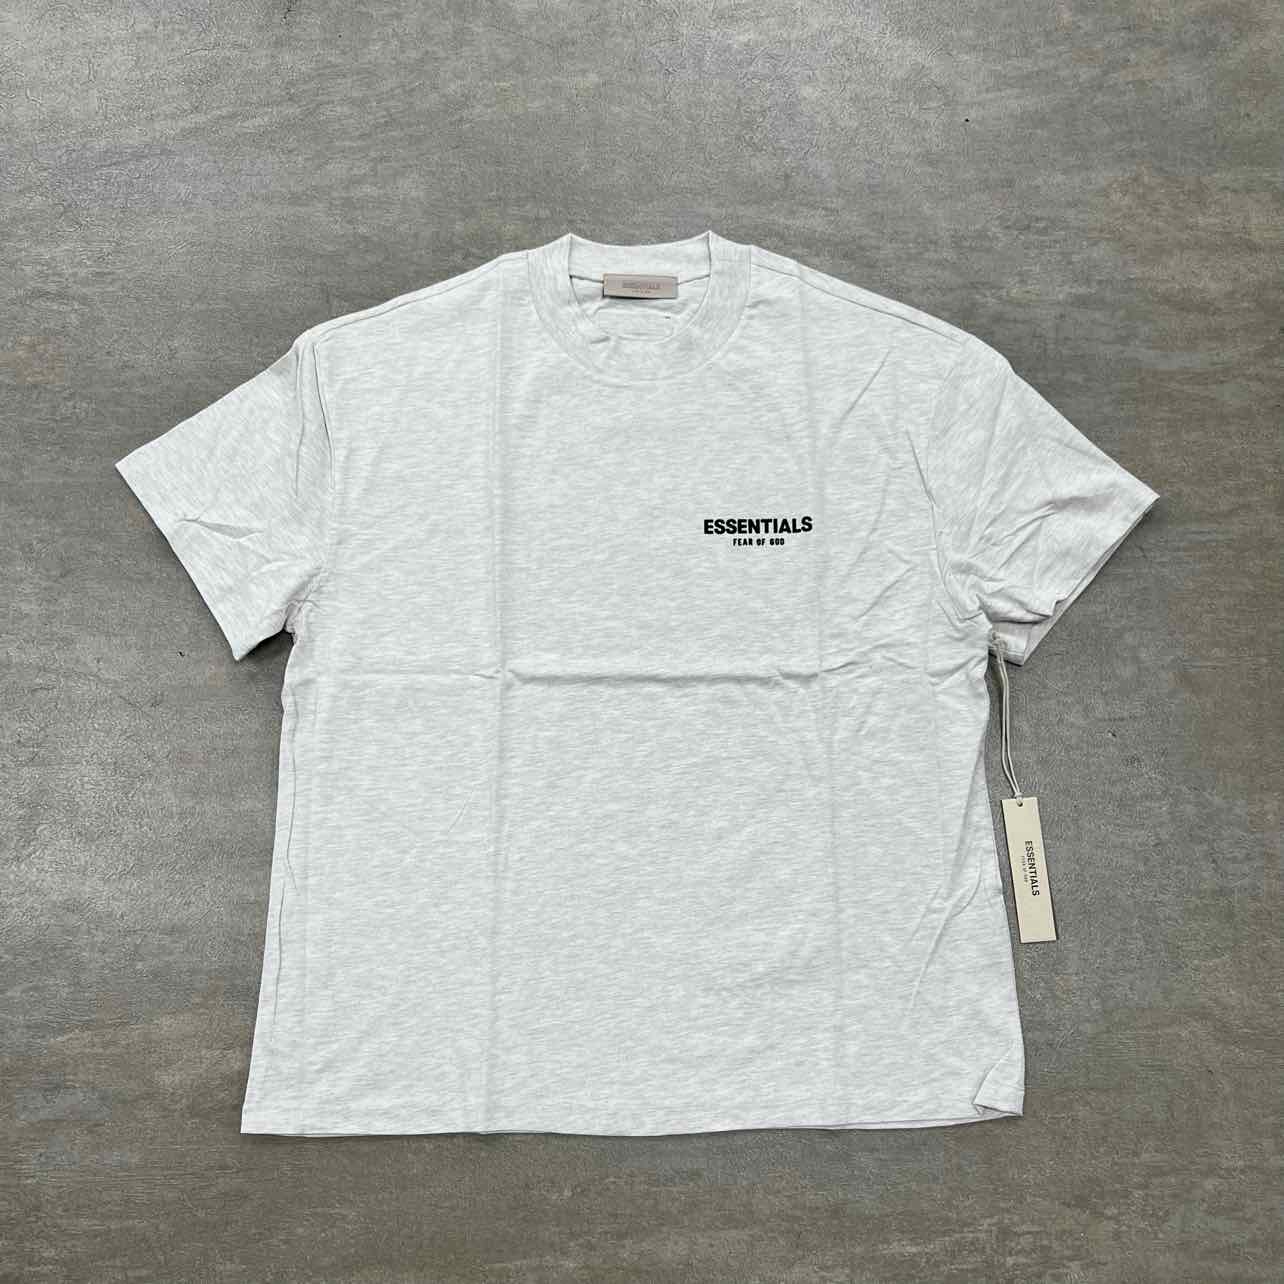 Fear of God T-Shirt &quot;ESSENTIALS&quot; Light Oatmeal New Size XL